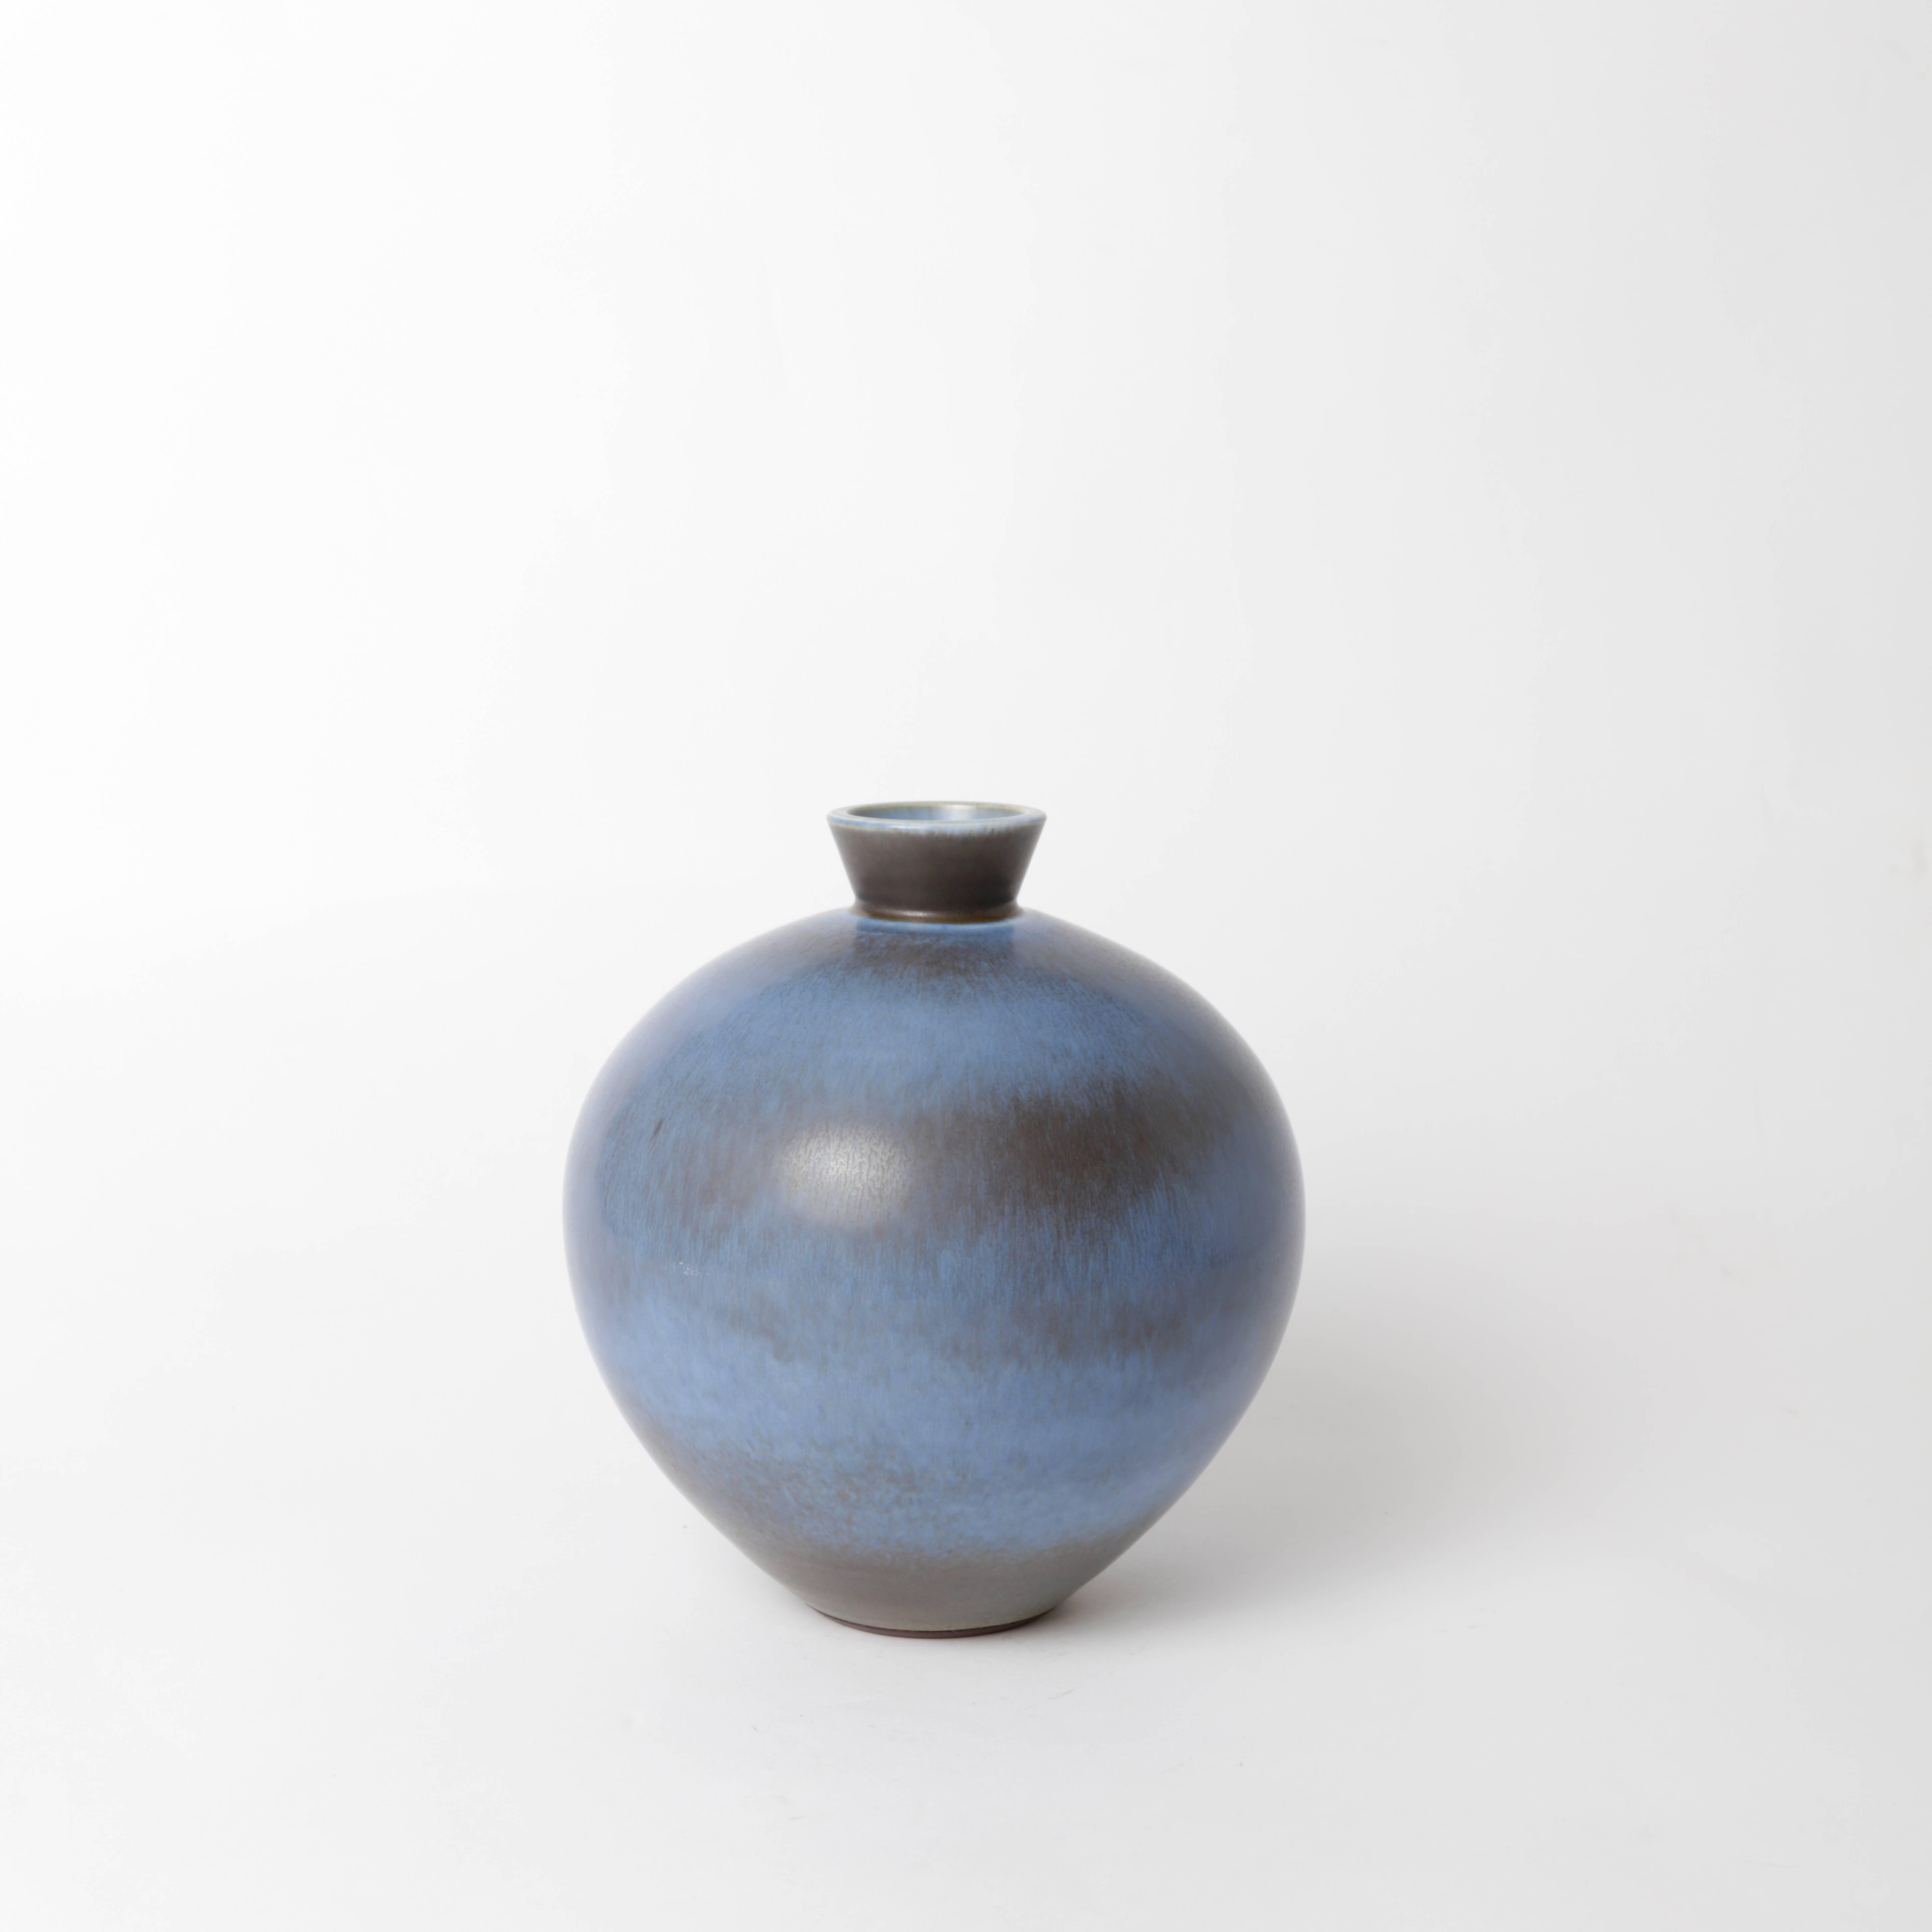 Unique stoneware vase by Berndt Friberg for Gustavsberg 1976 with harefur glaze.
Measures: Height 20cm/7.9